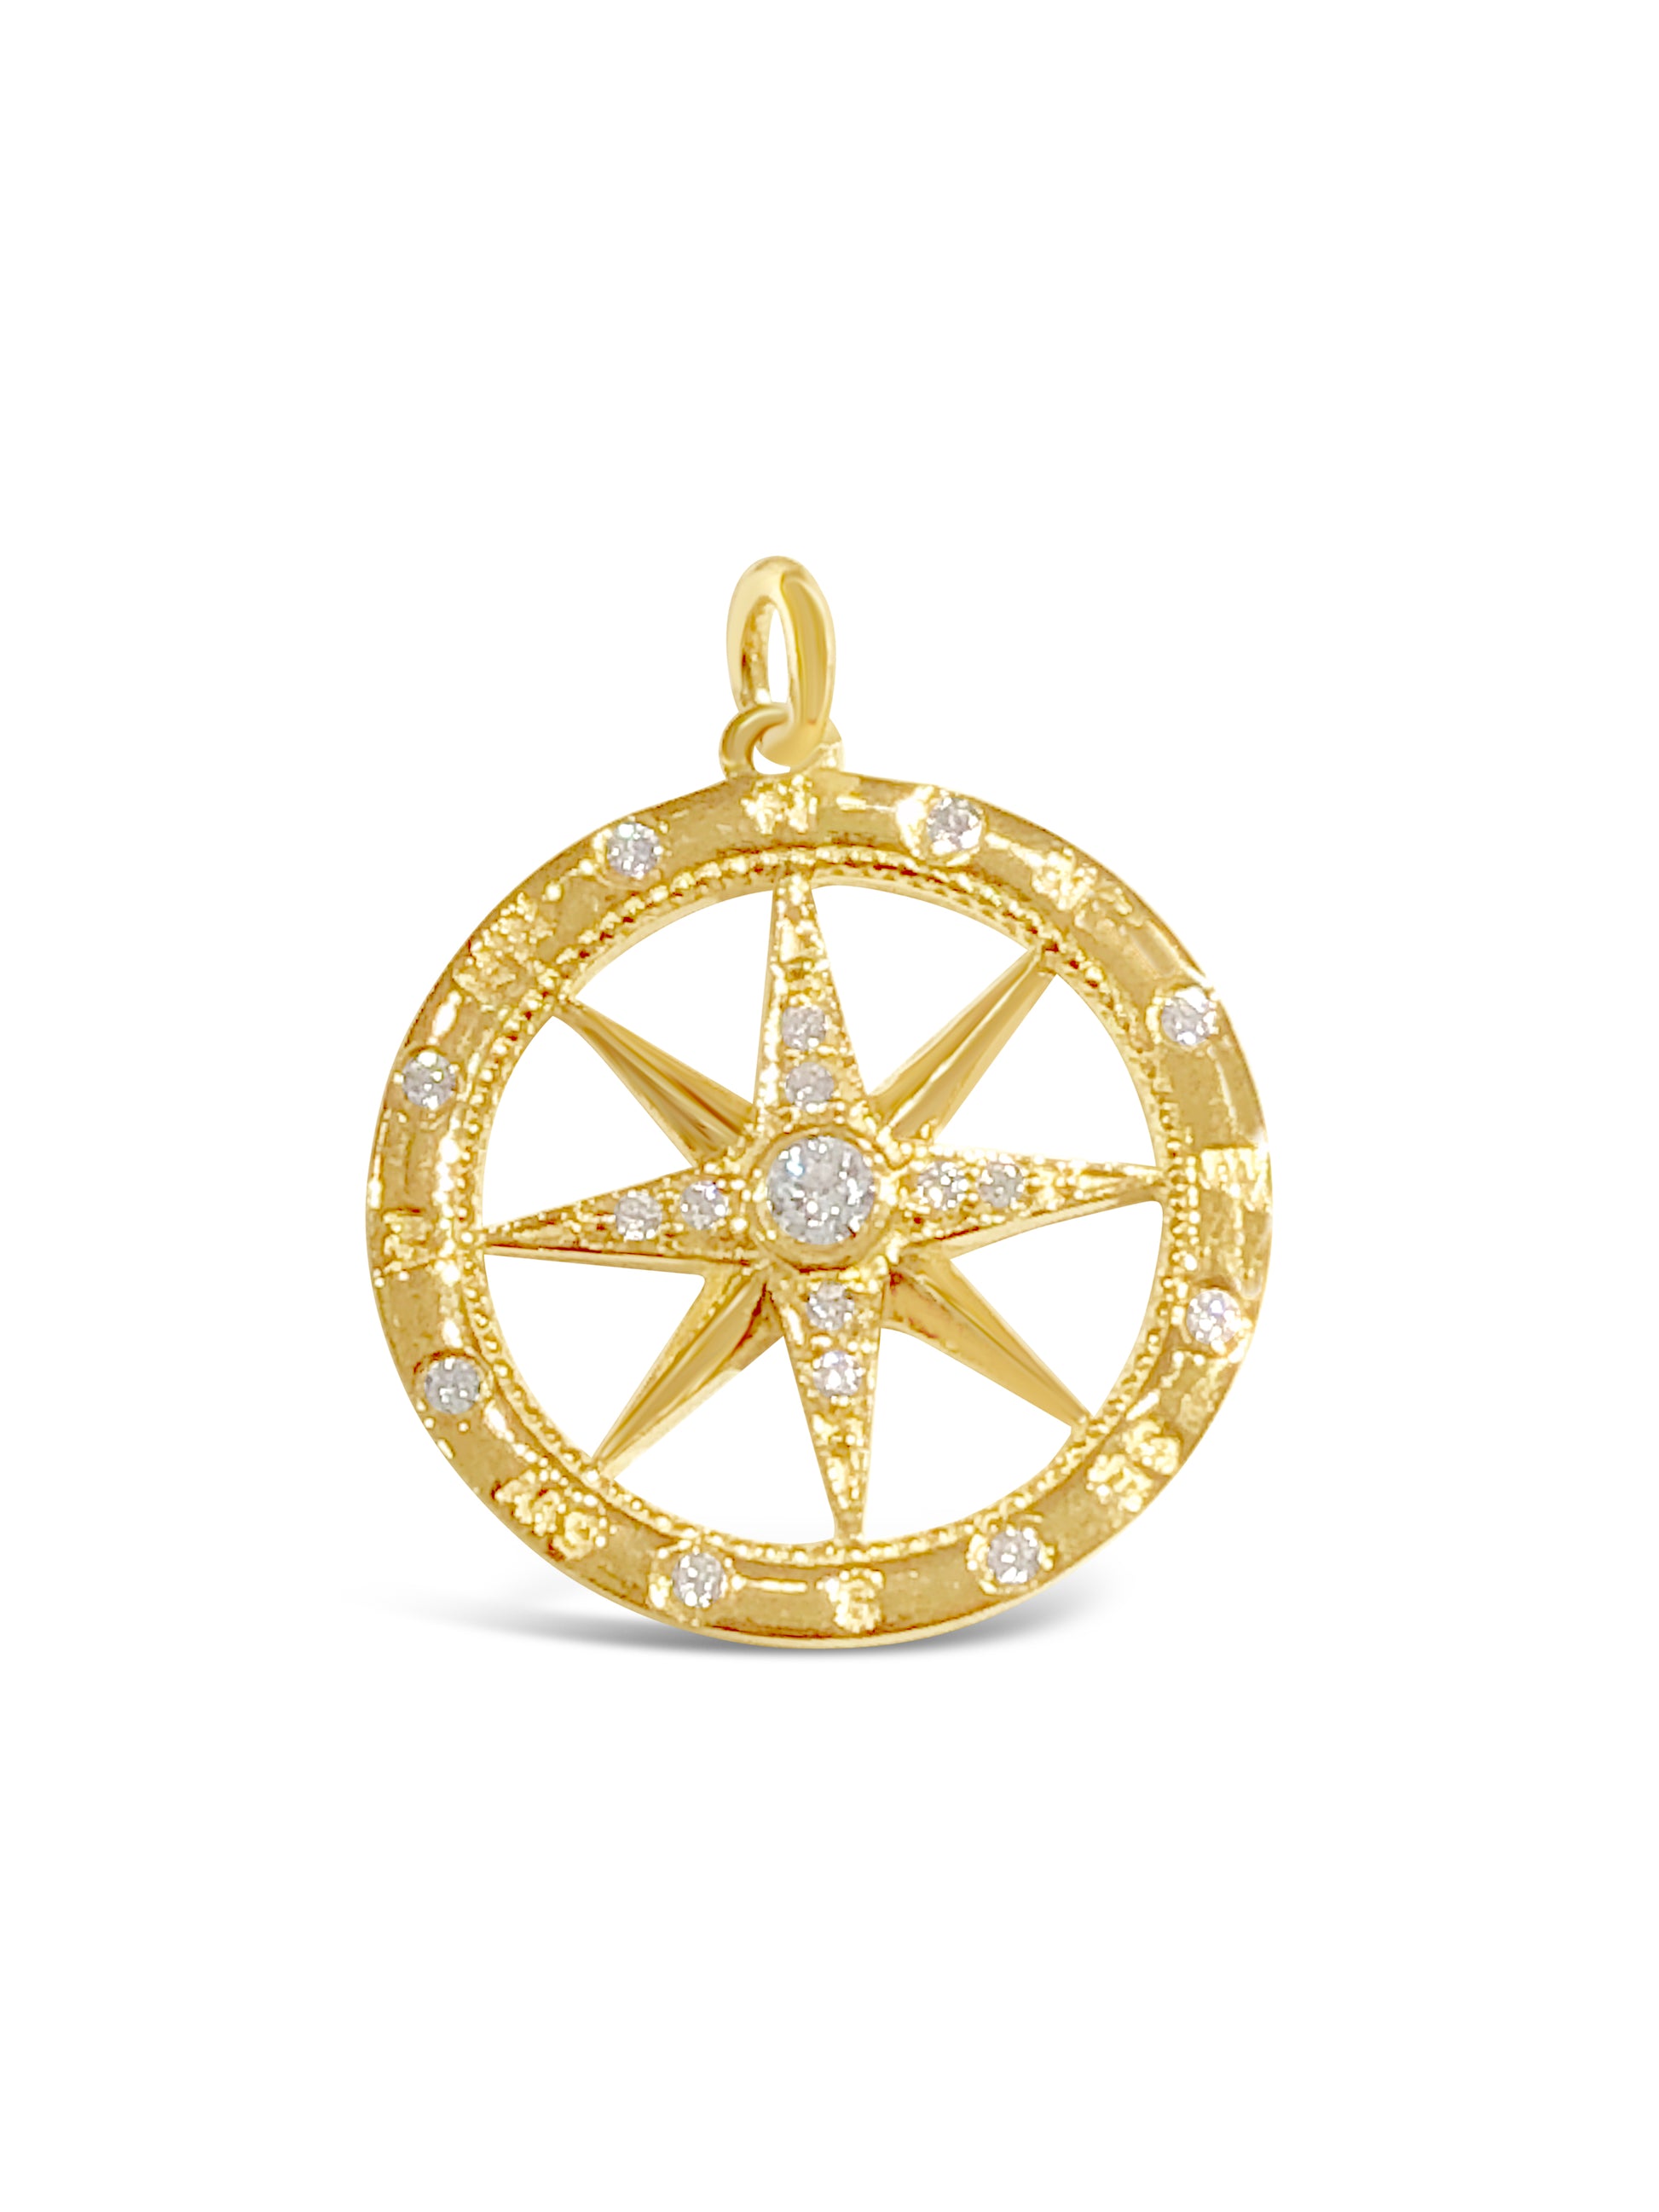 6469Y Diamond Compass Rose 14KY - Coastal Jewelers - Kennebunkport